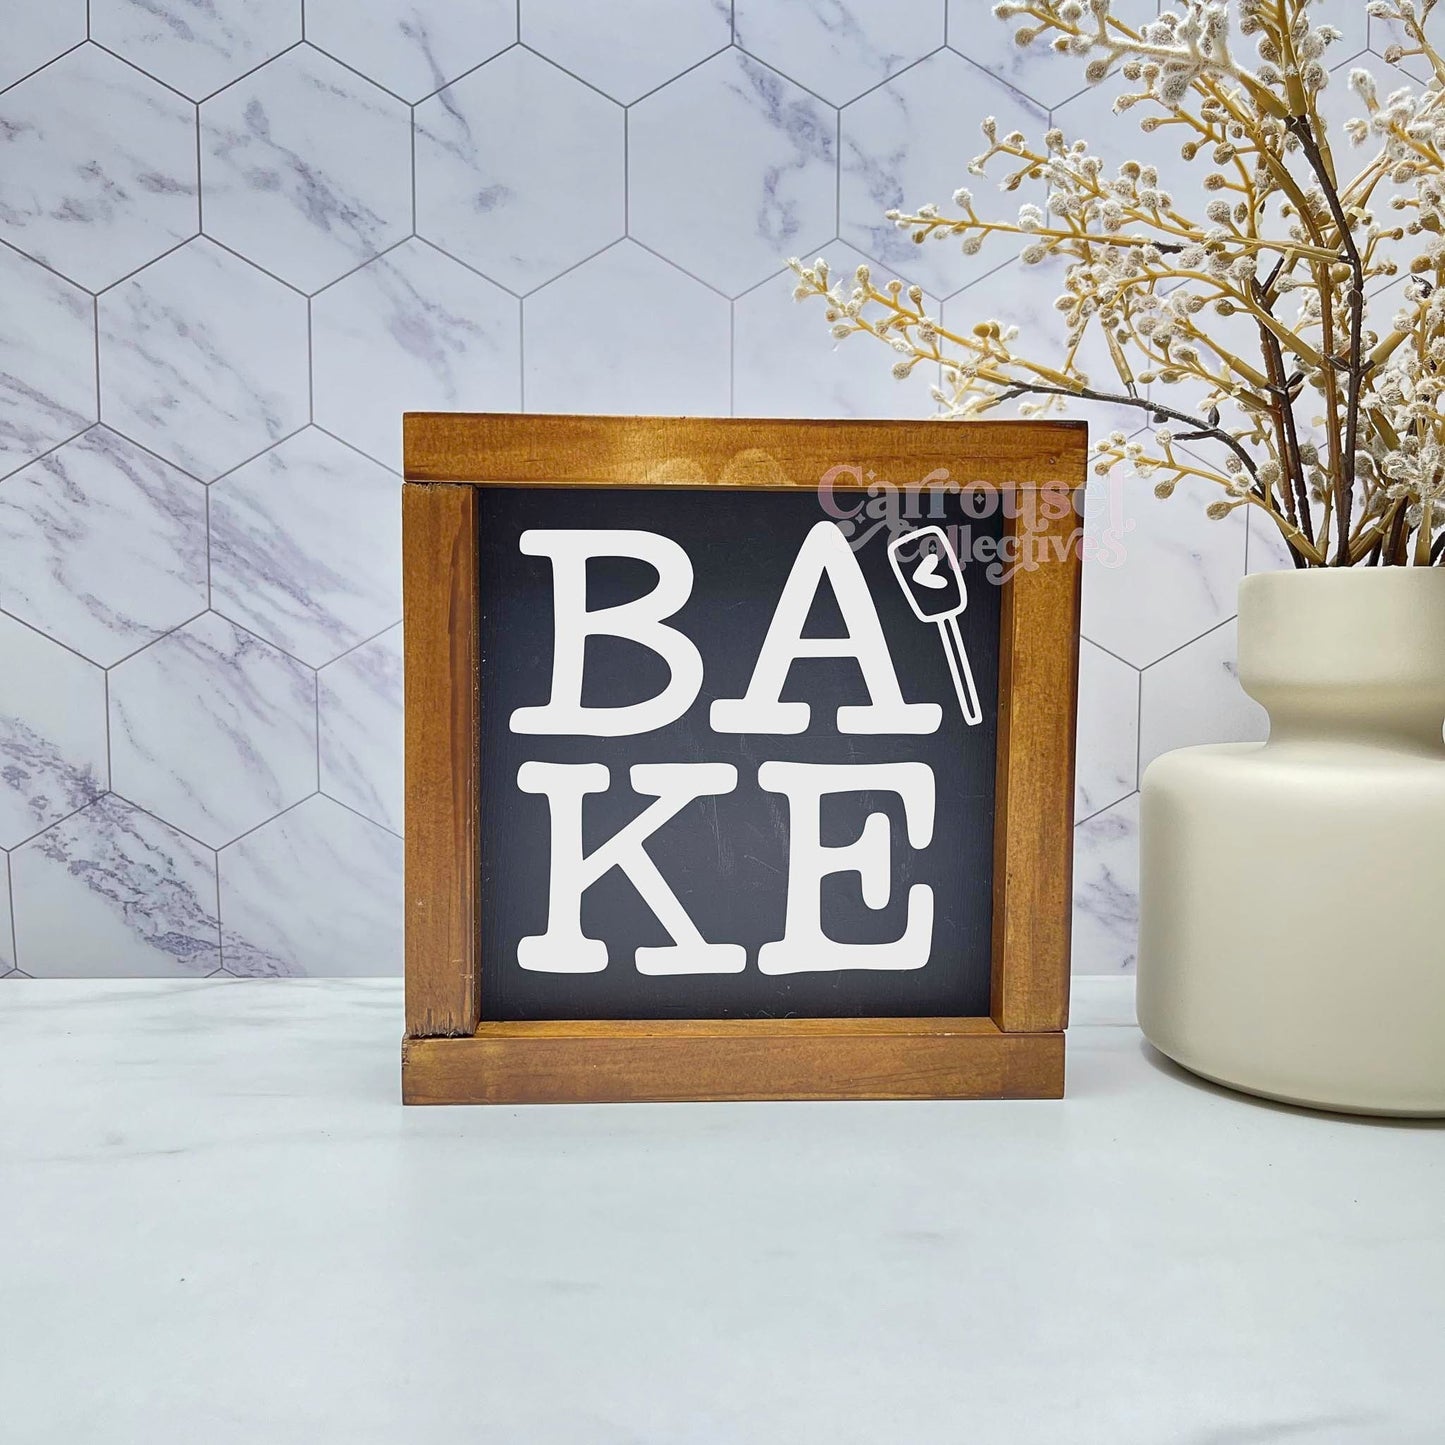 Bake framed kitchen wood sign, kitchen decor, home decor